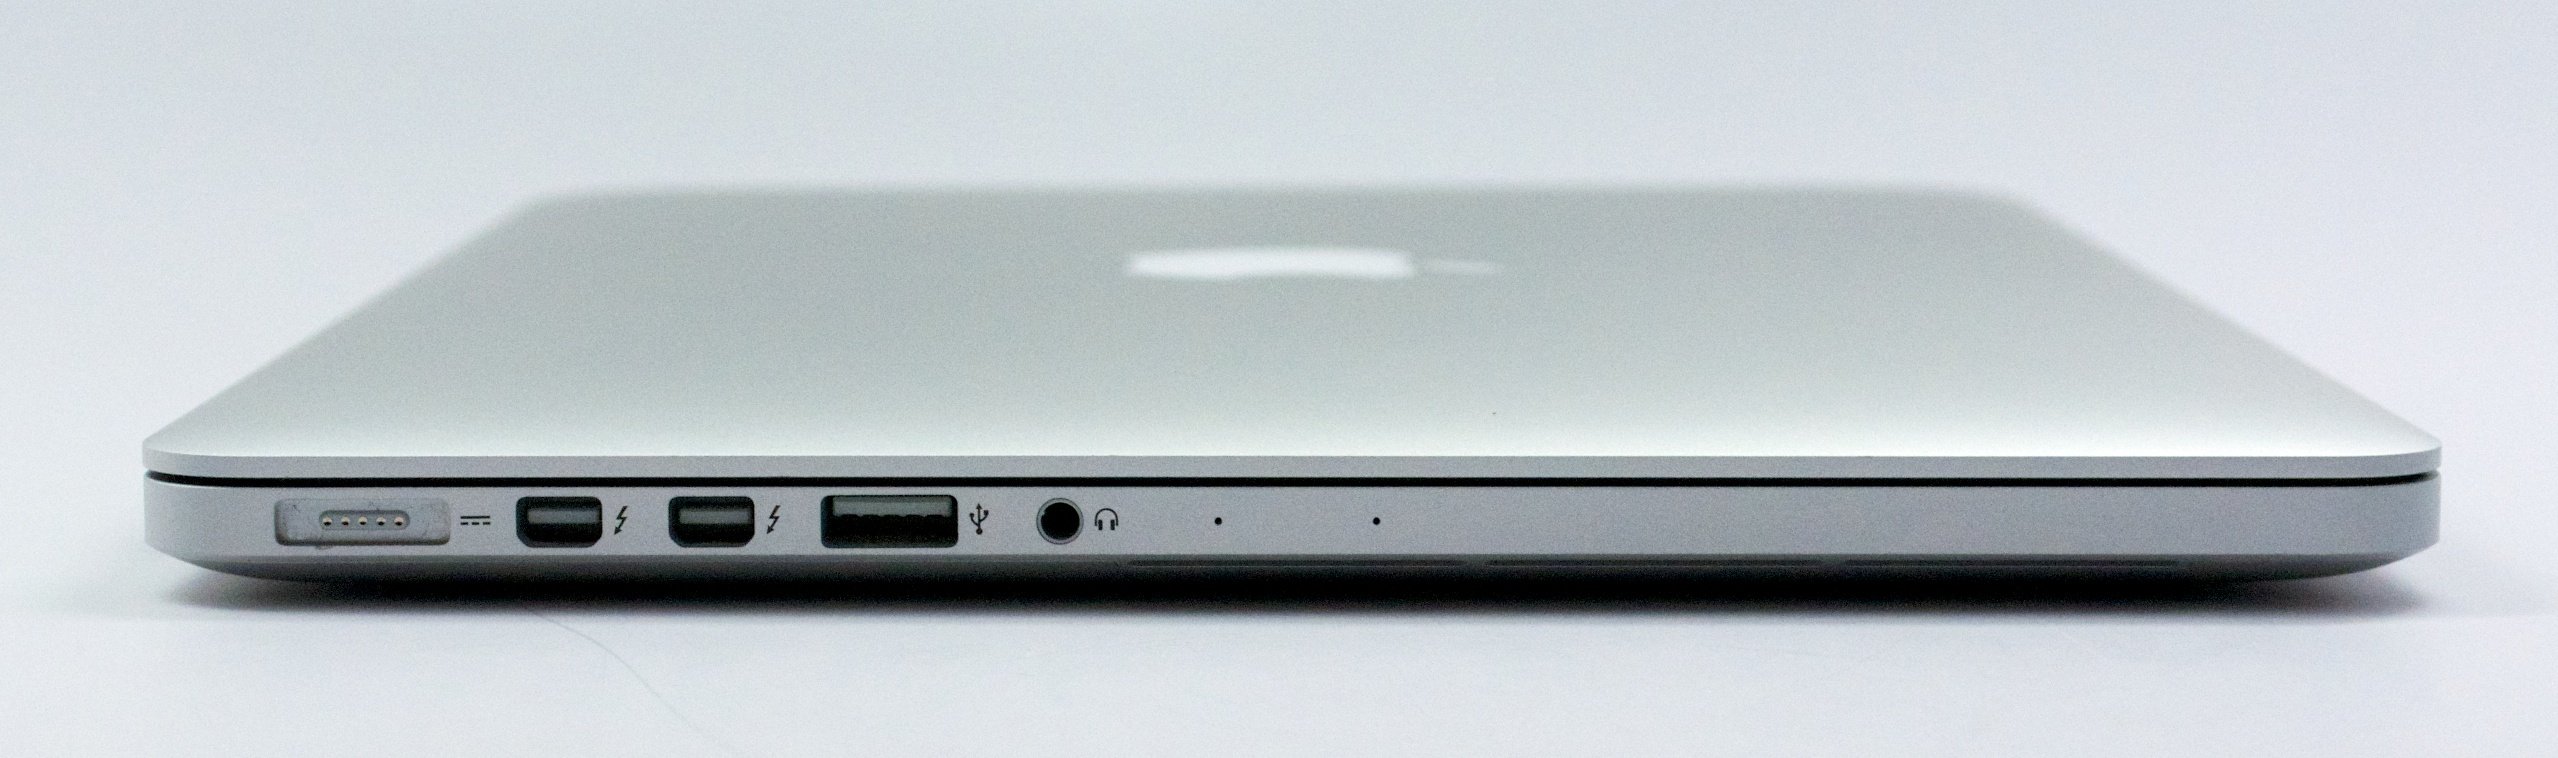 13-inch MacBook Pro Retina Review (Late 2013)